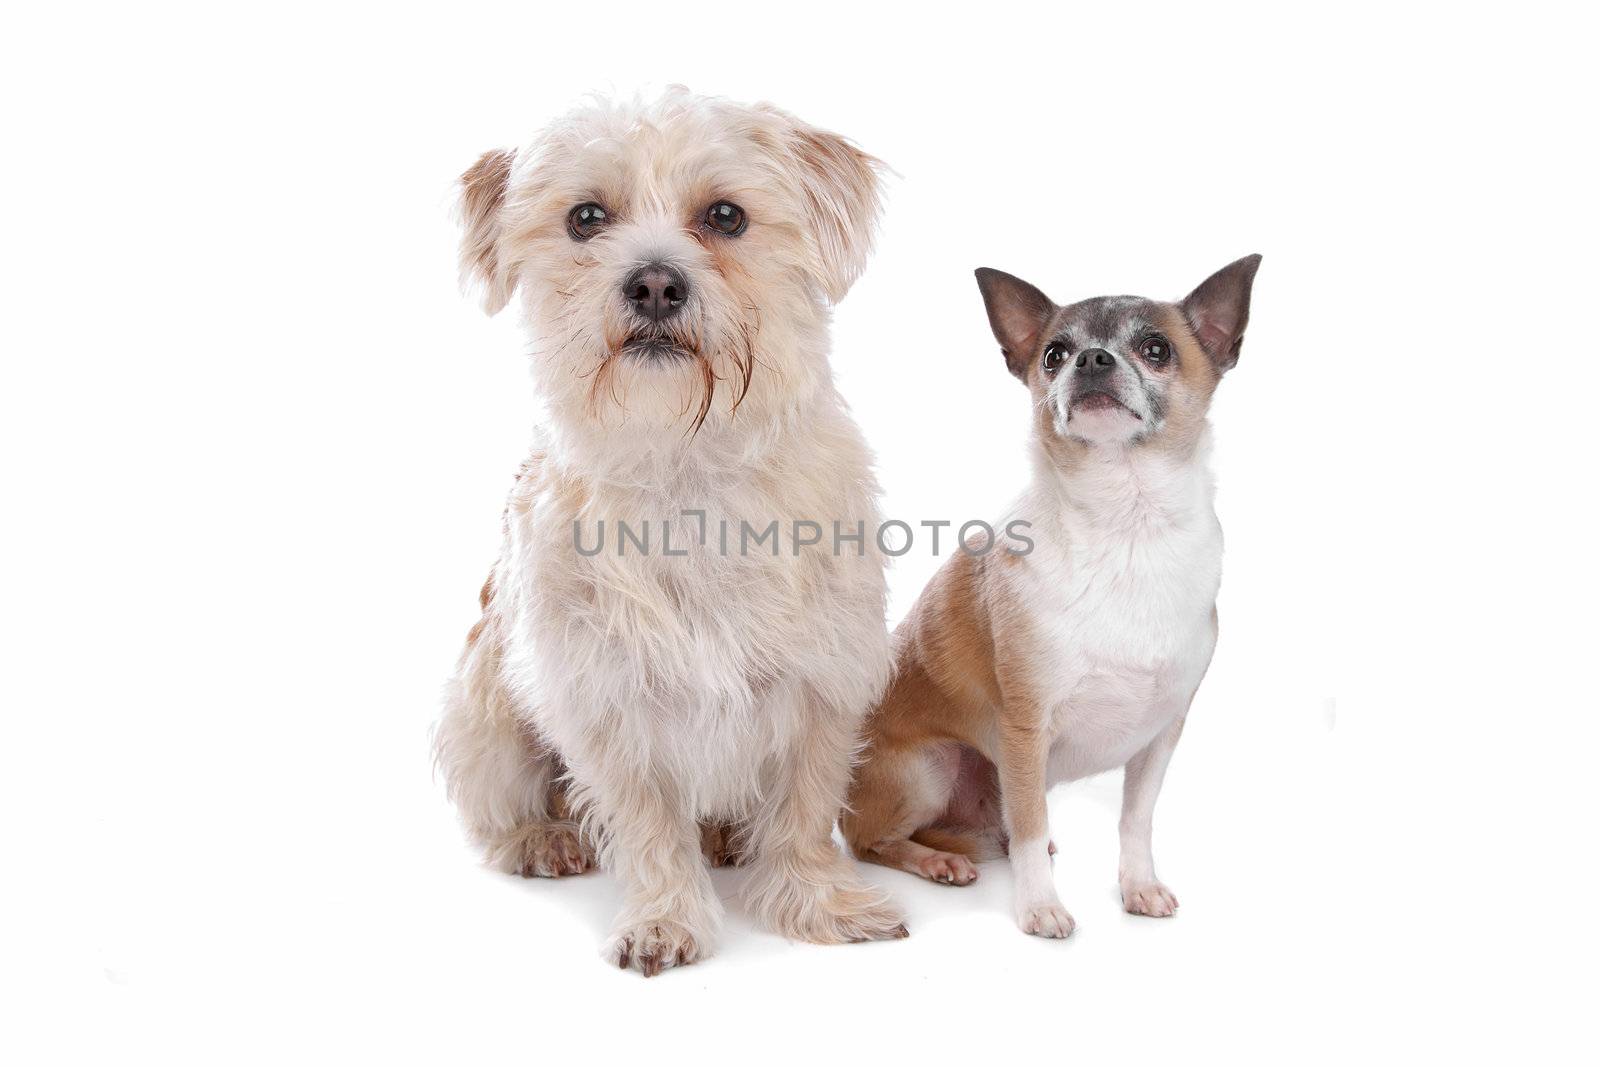 chihuahua and a mixed breed dog by eriklam